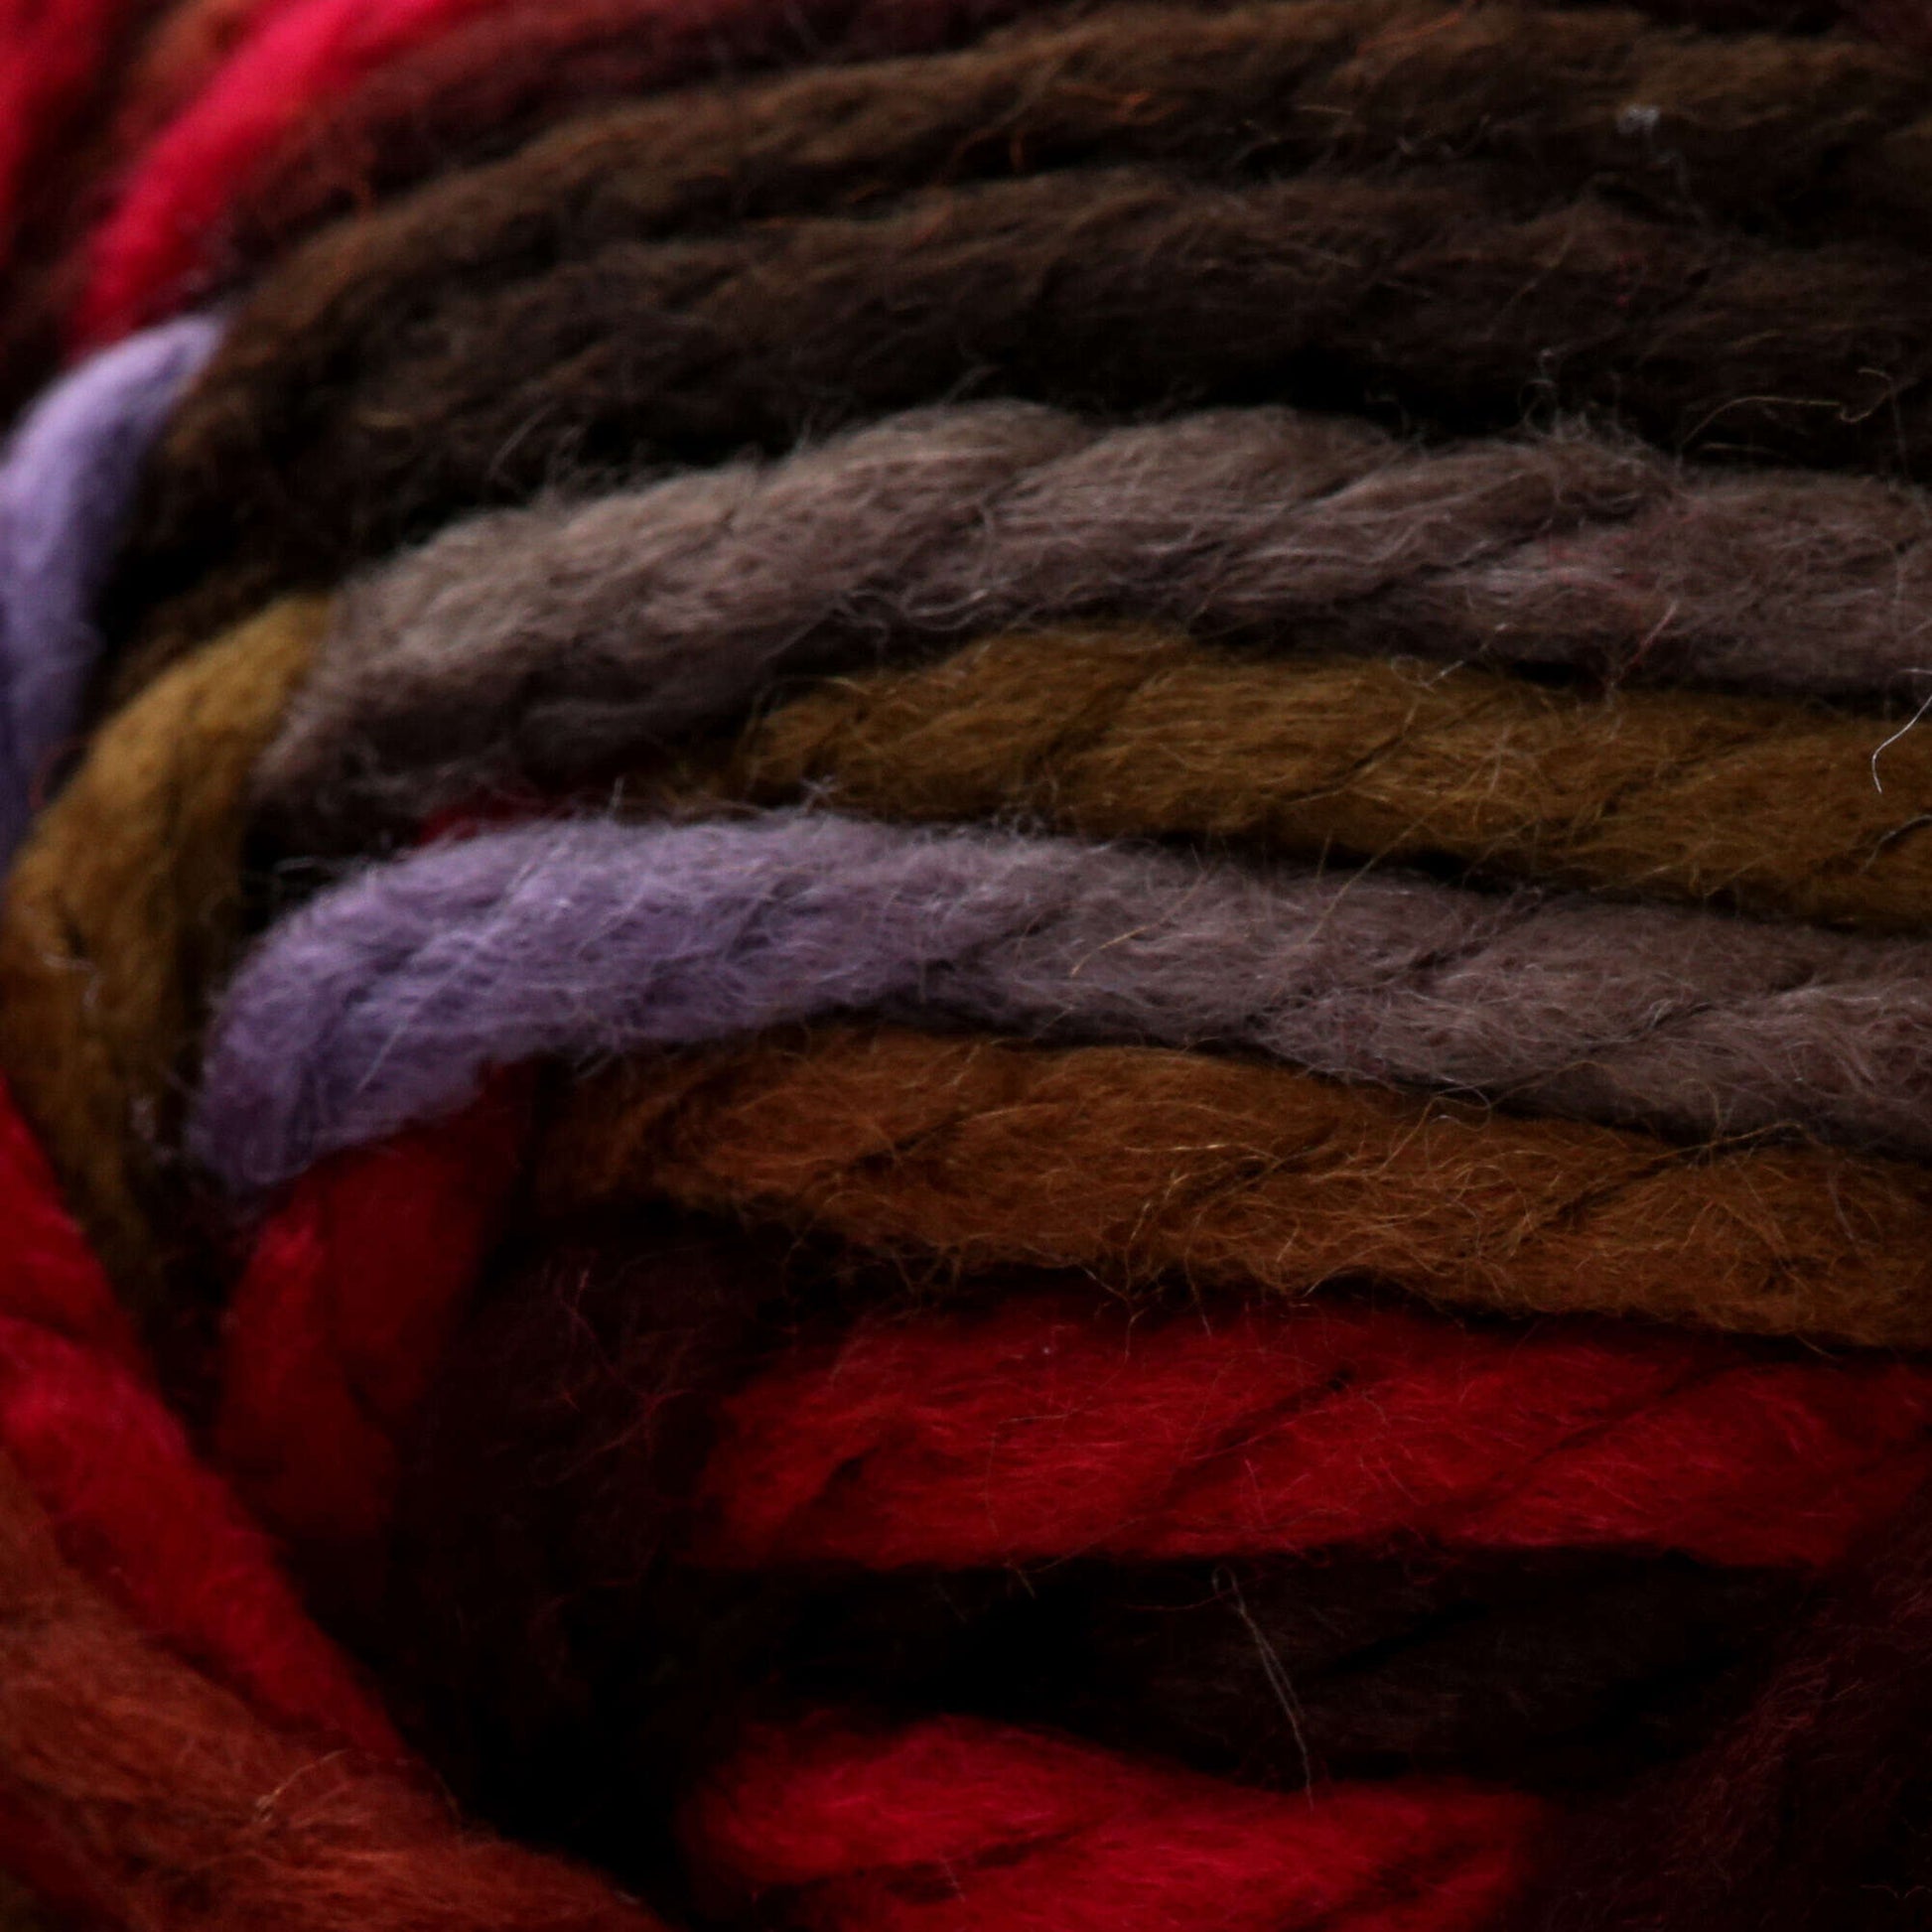 Bernat Softee Chunky Ombres Yarn - Discontinued Shades